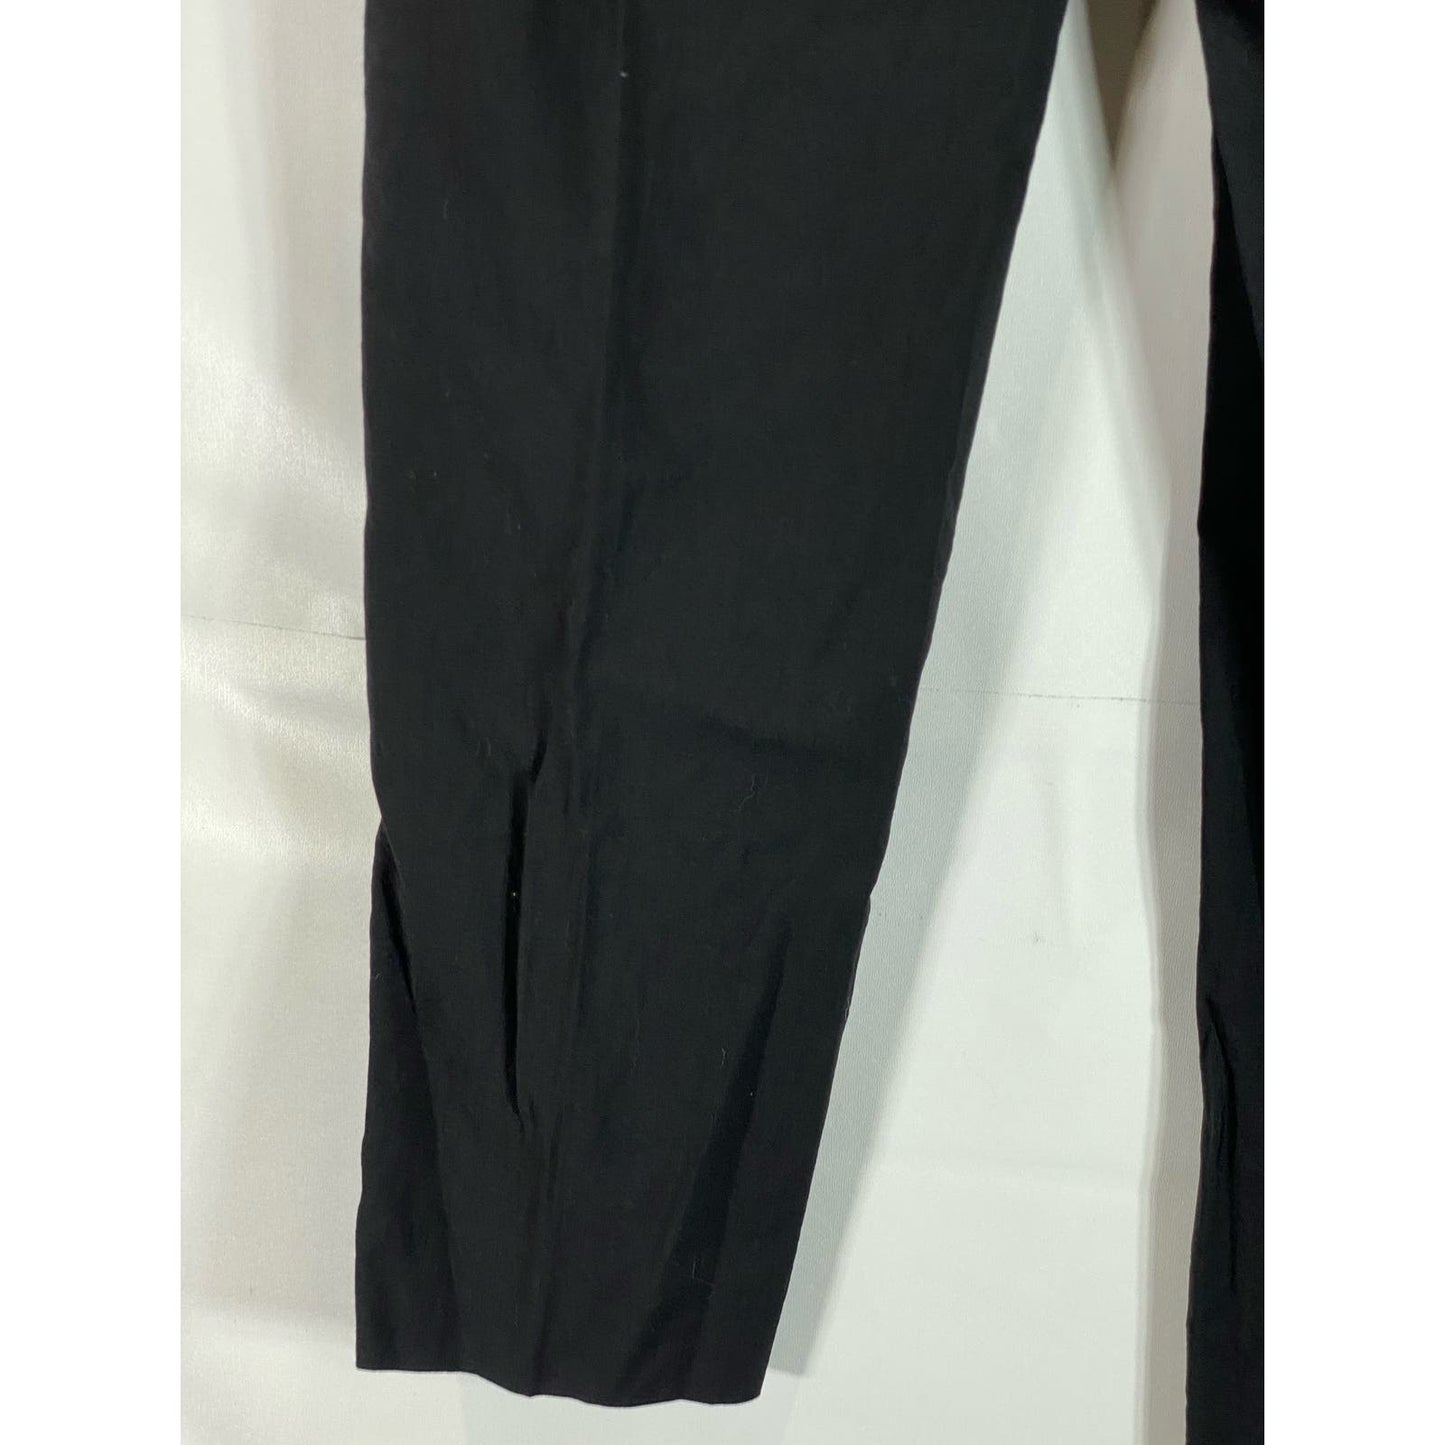 BANANA REPUBLIC Men's Black Solid Tailored Slim-Fit Dress Pants SZ 33X32